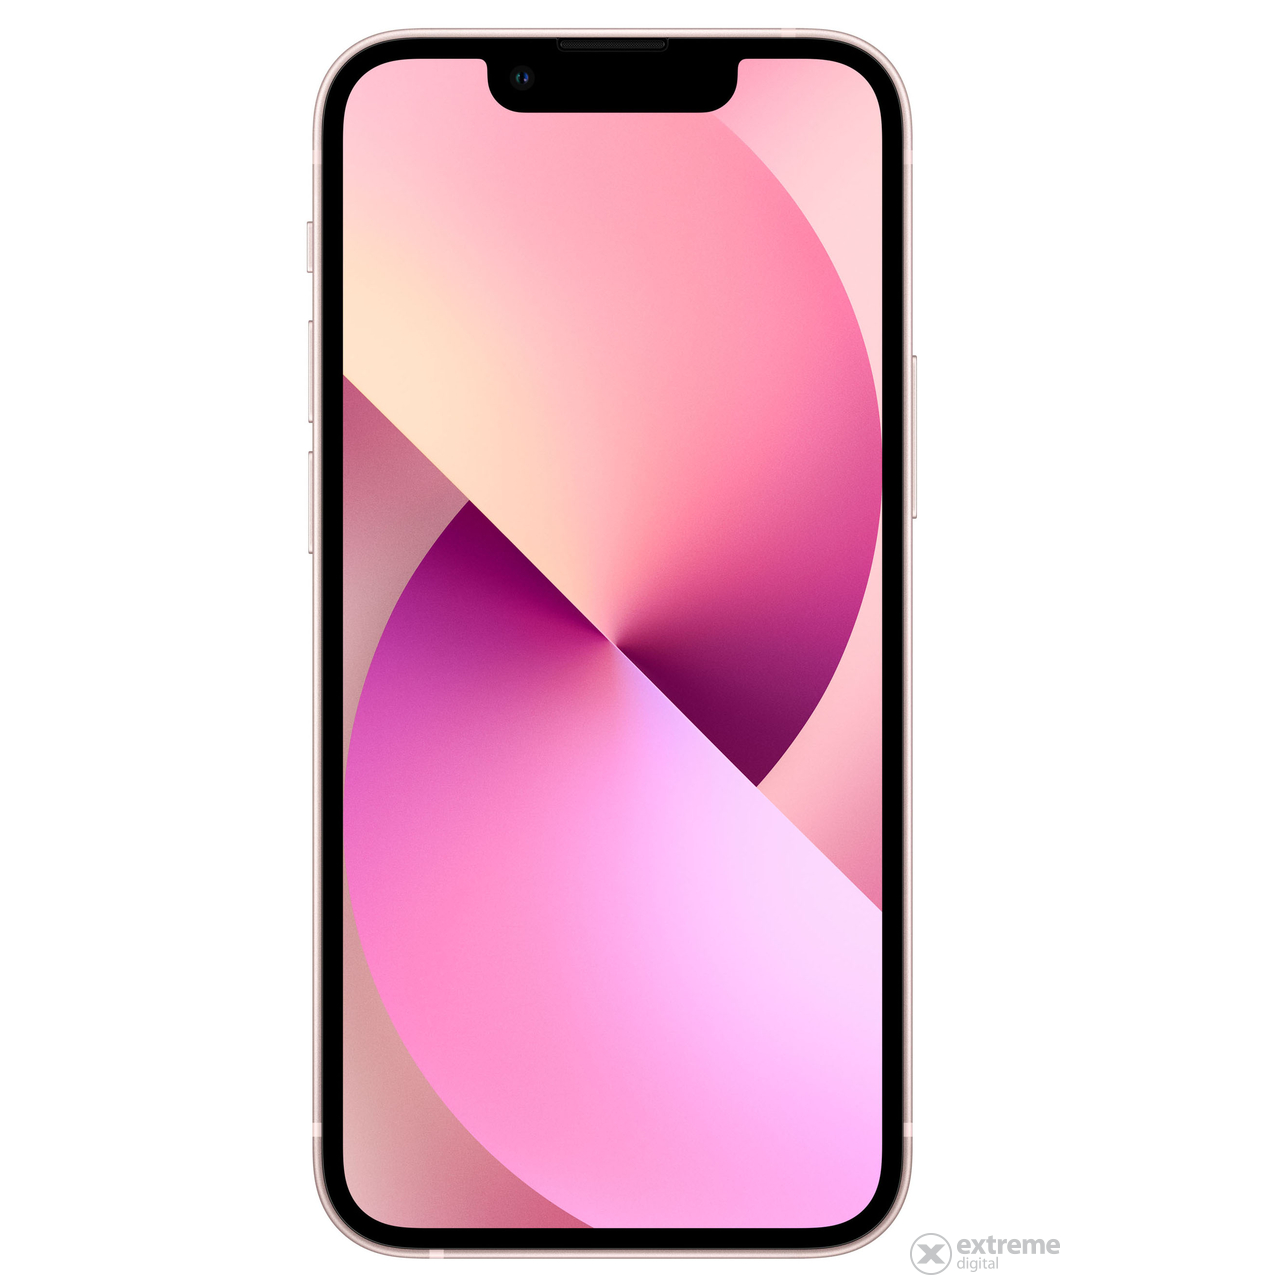 Apple iPhone 13 mini 128GB neodvisen pametni telefon (mlk23hu/a), pink